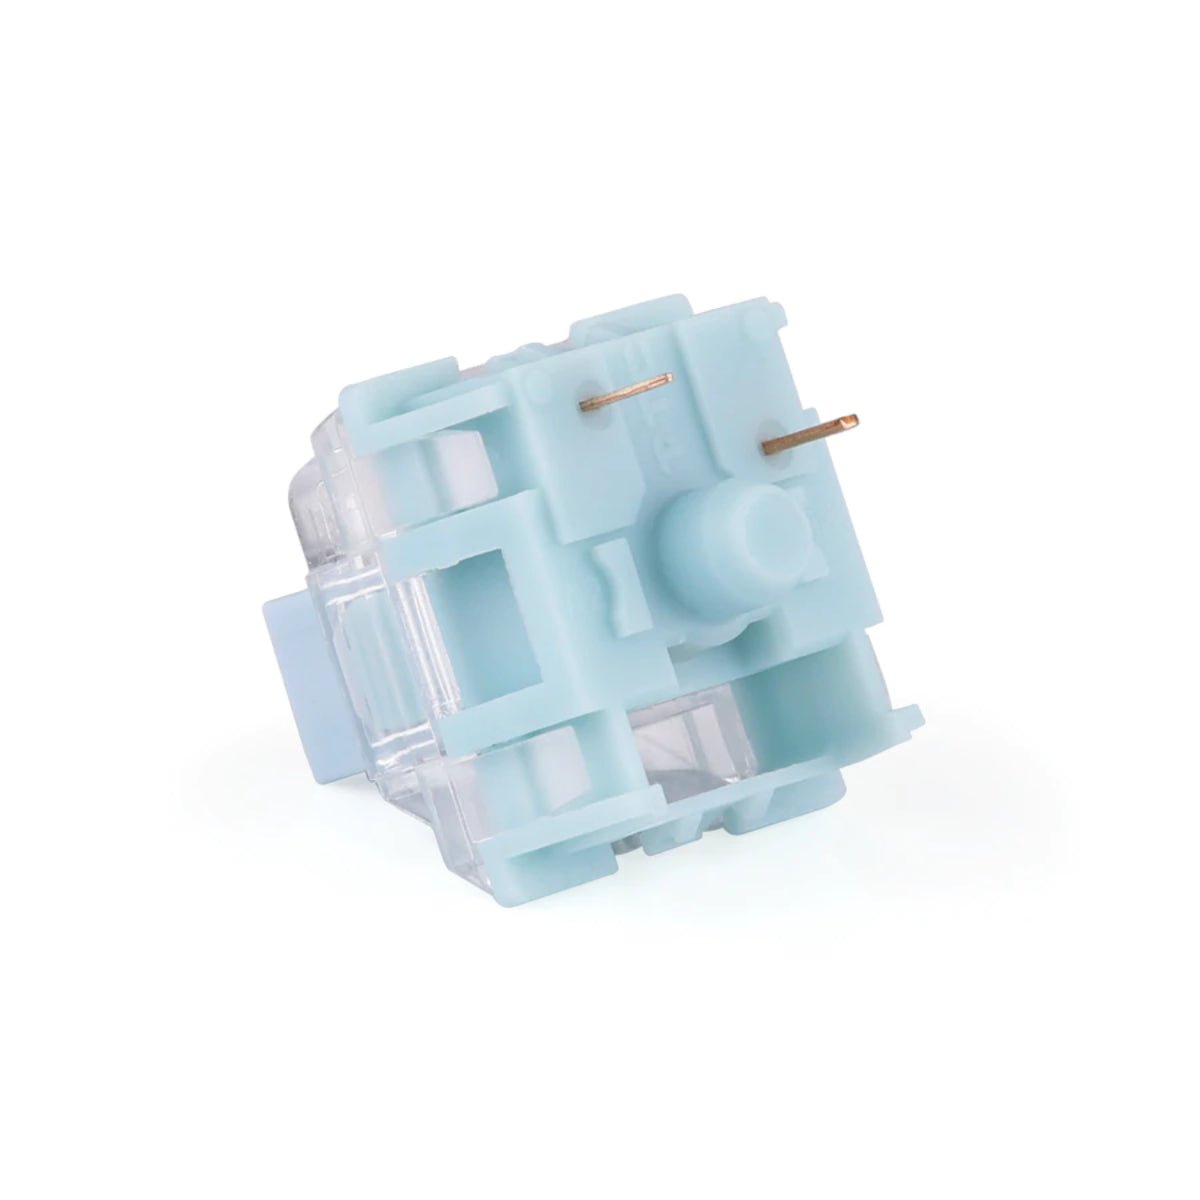 KBD Fans TTC Tactile Switches - Bluish White - Store 974 | ستور ٩٧٤